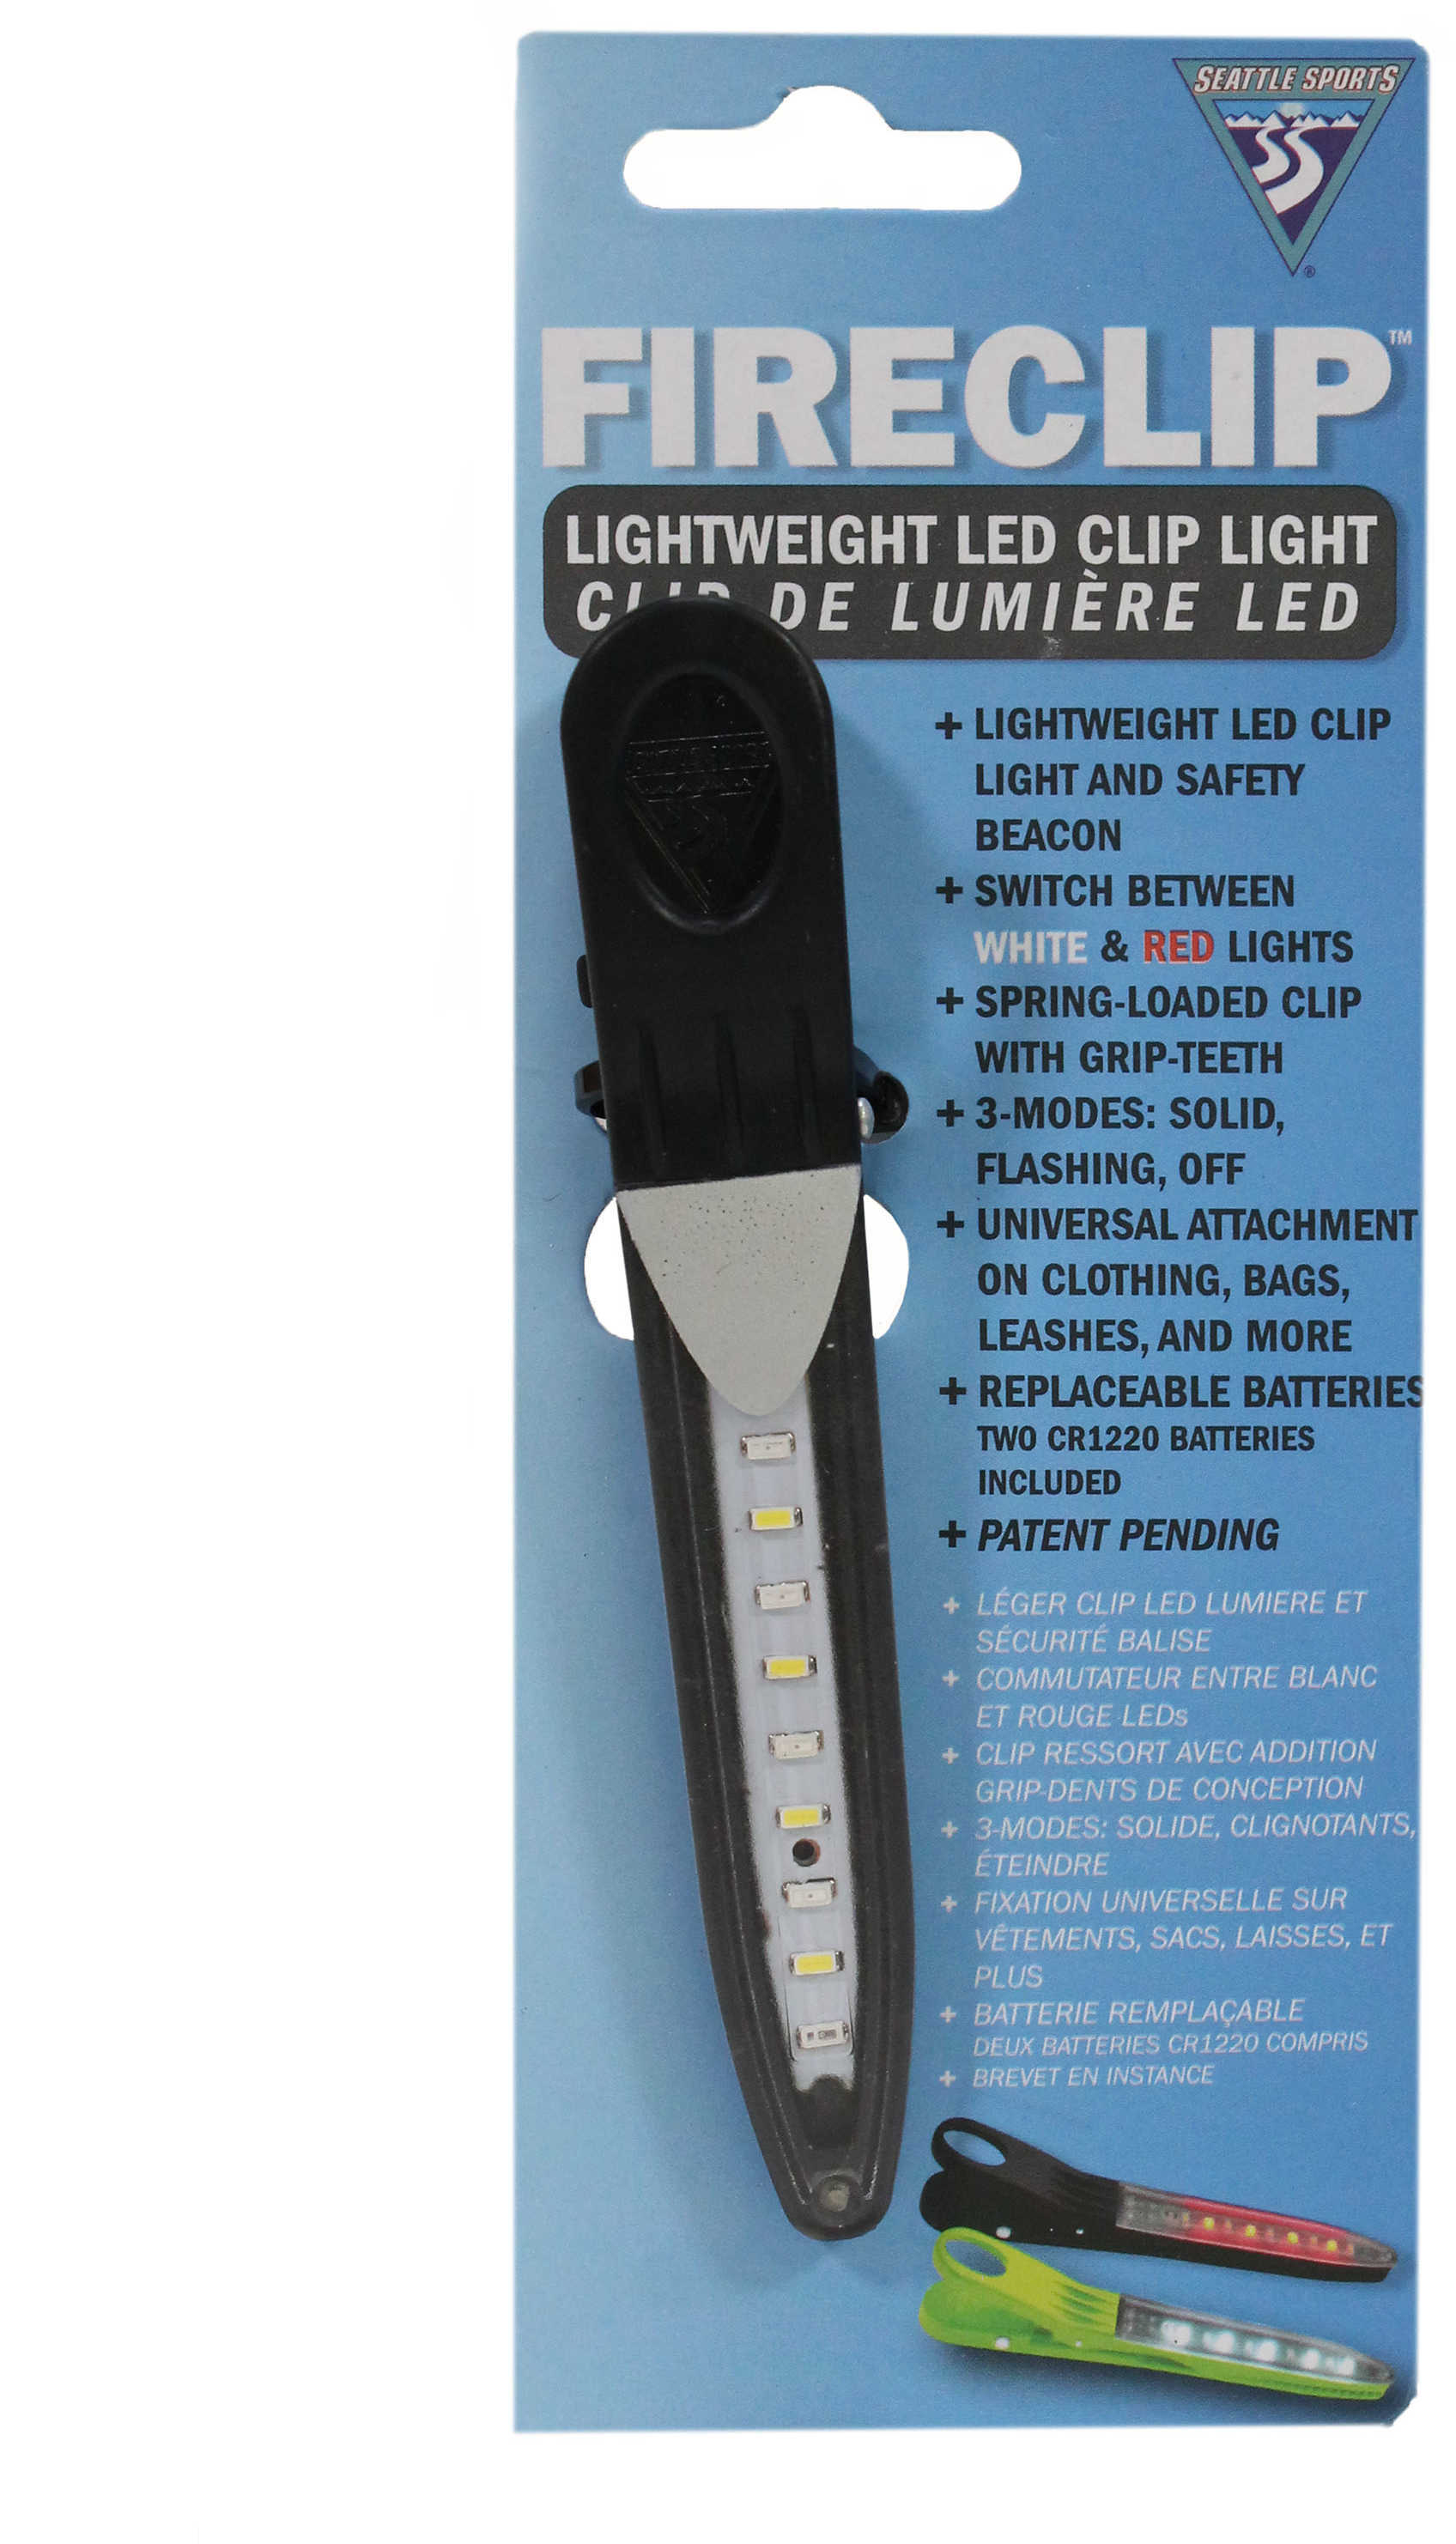 Seattle Sports FireClip LED Light Black Md: 066815